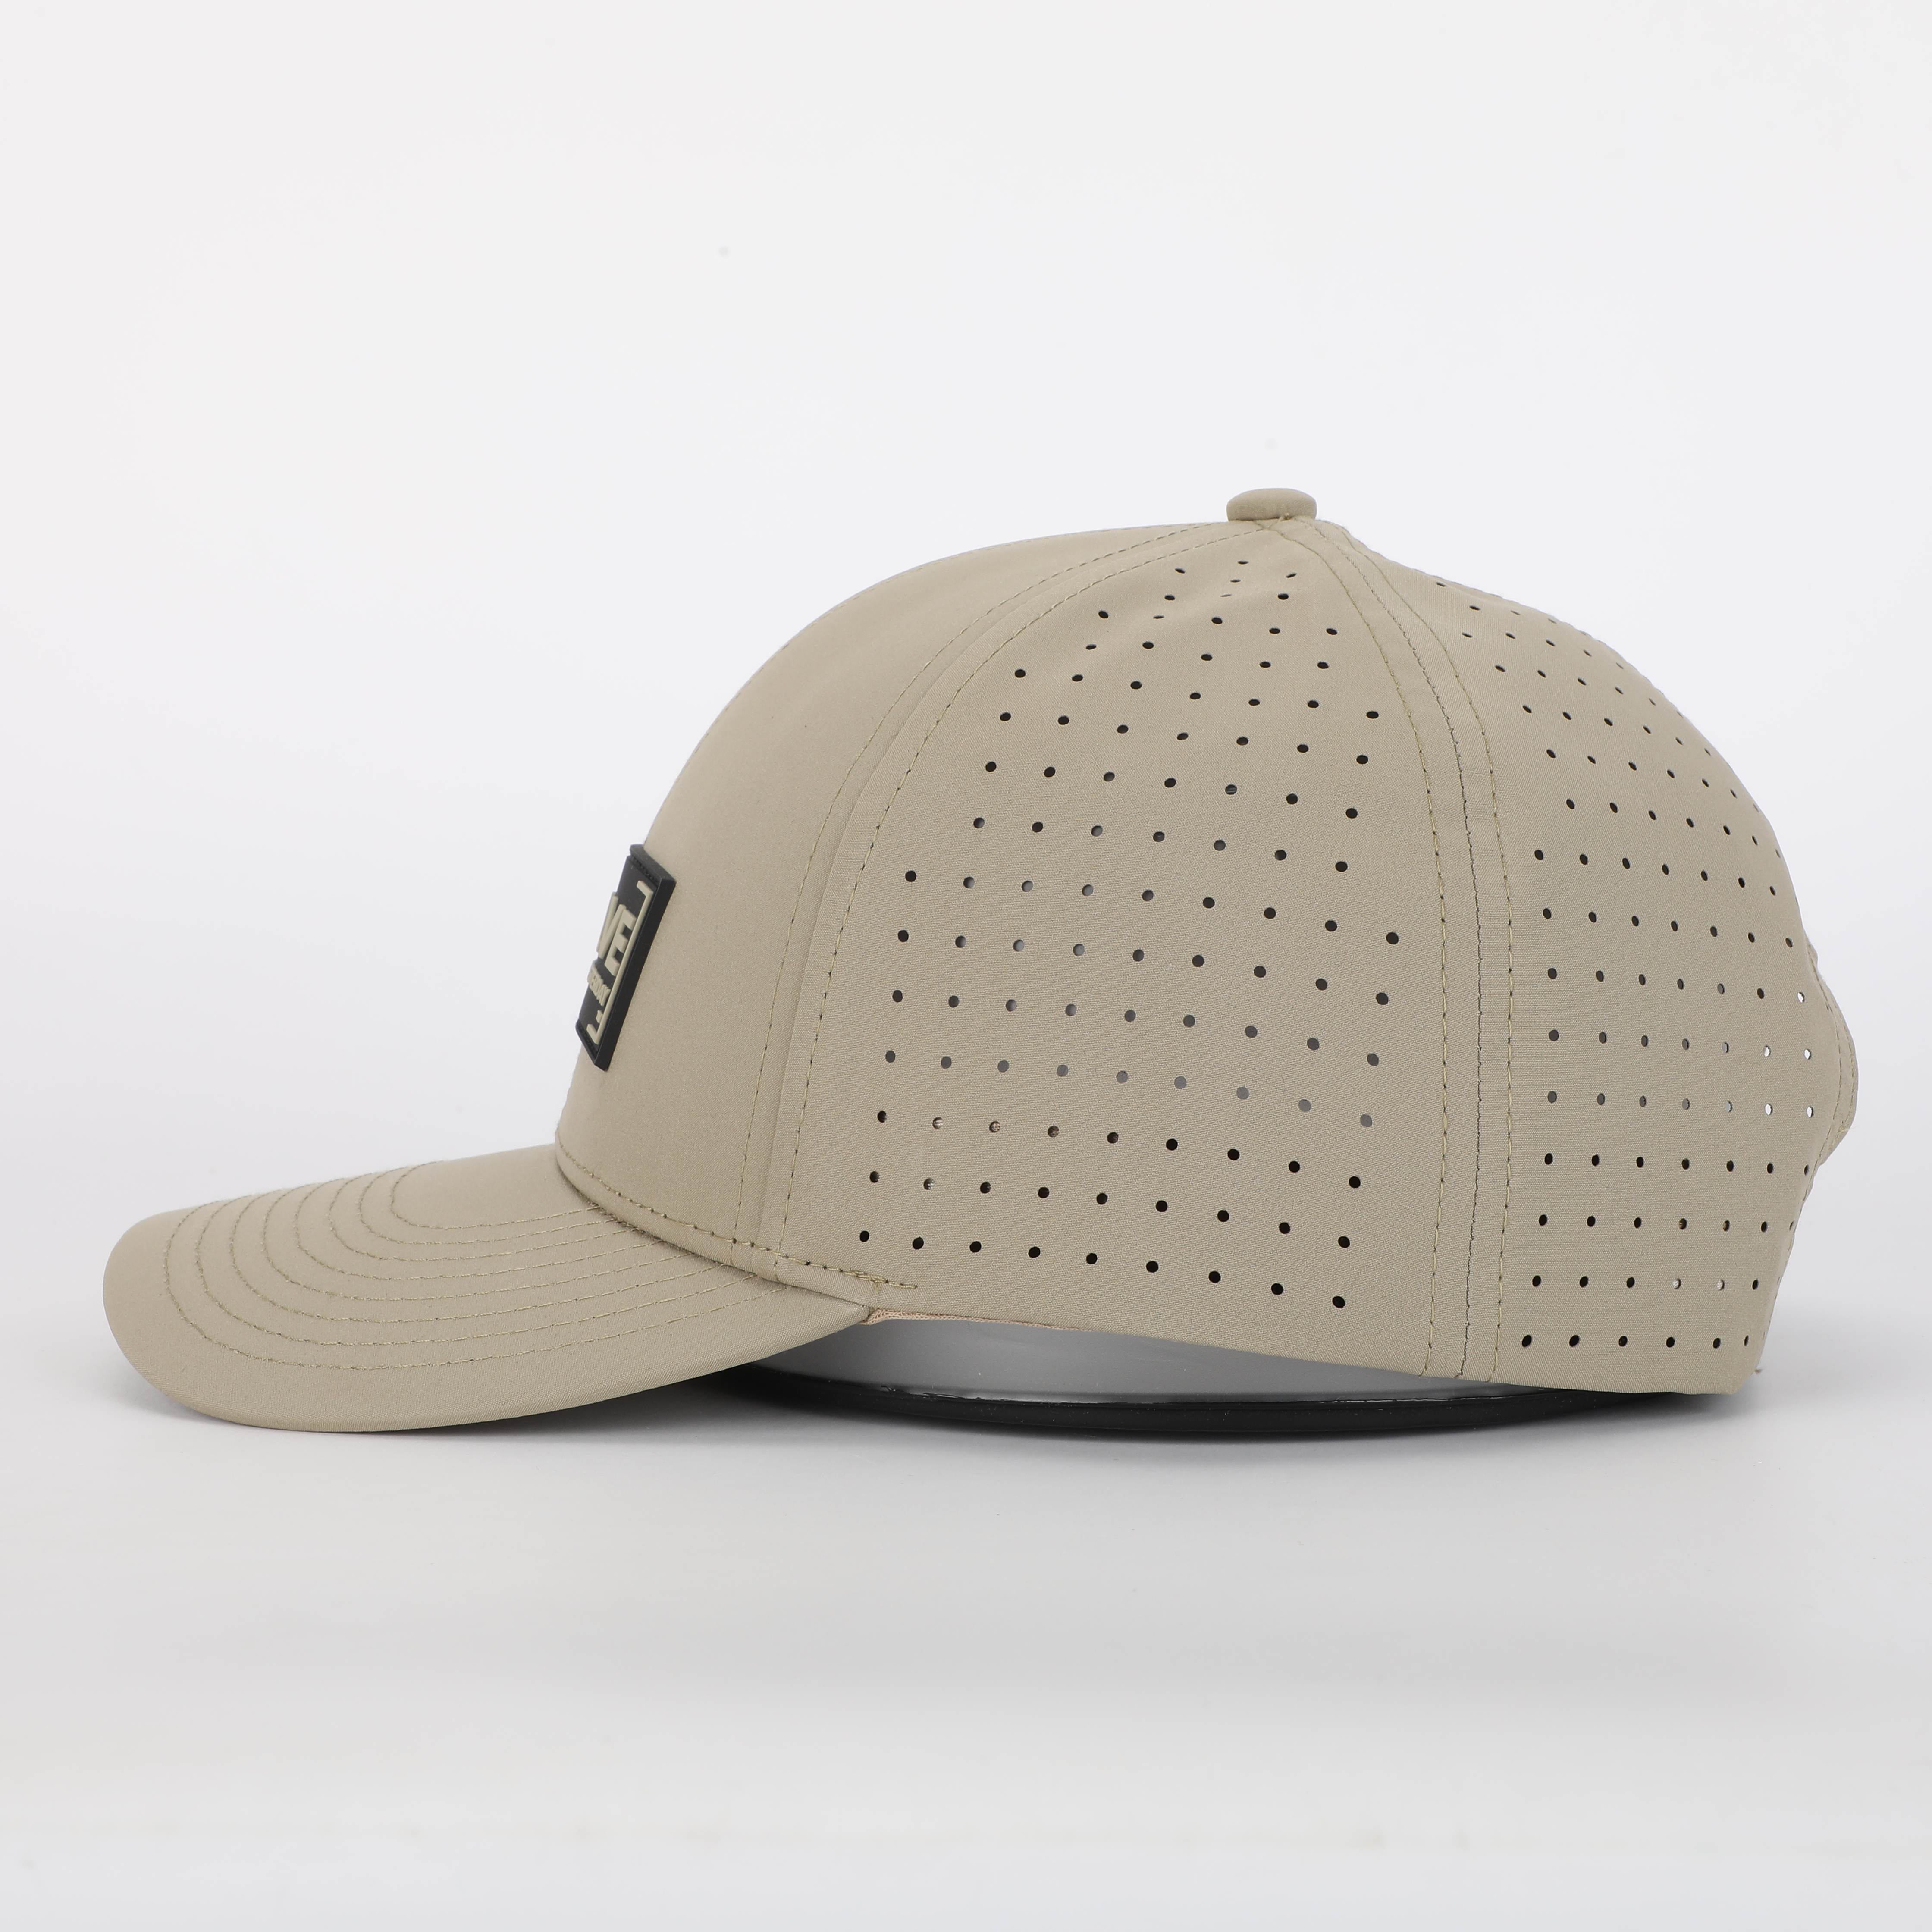 Evolve "Better Than Yesterday" Snapback Hat for Men and Women (Polyester Blend, Tan/Black)